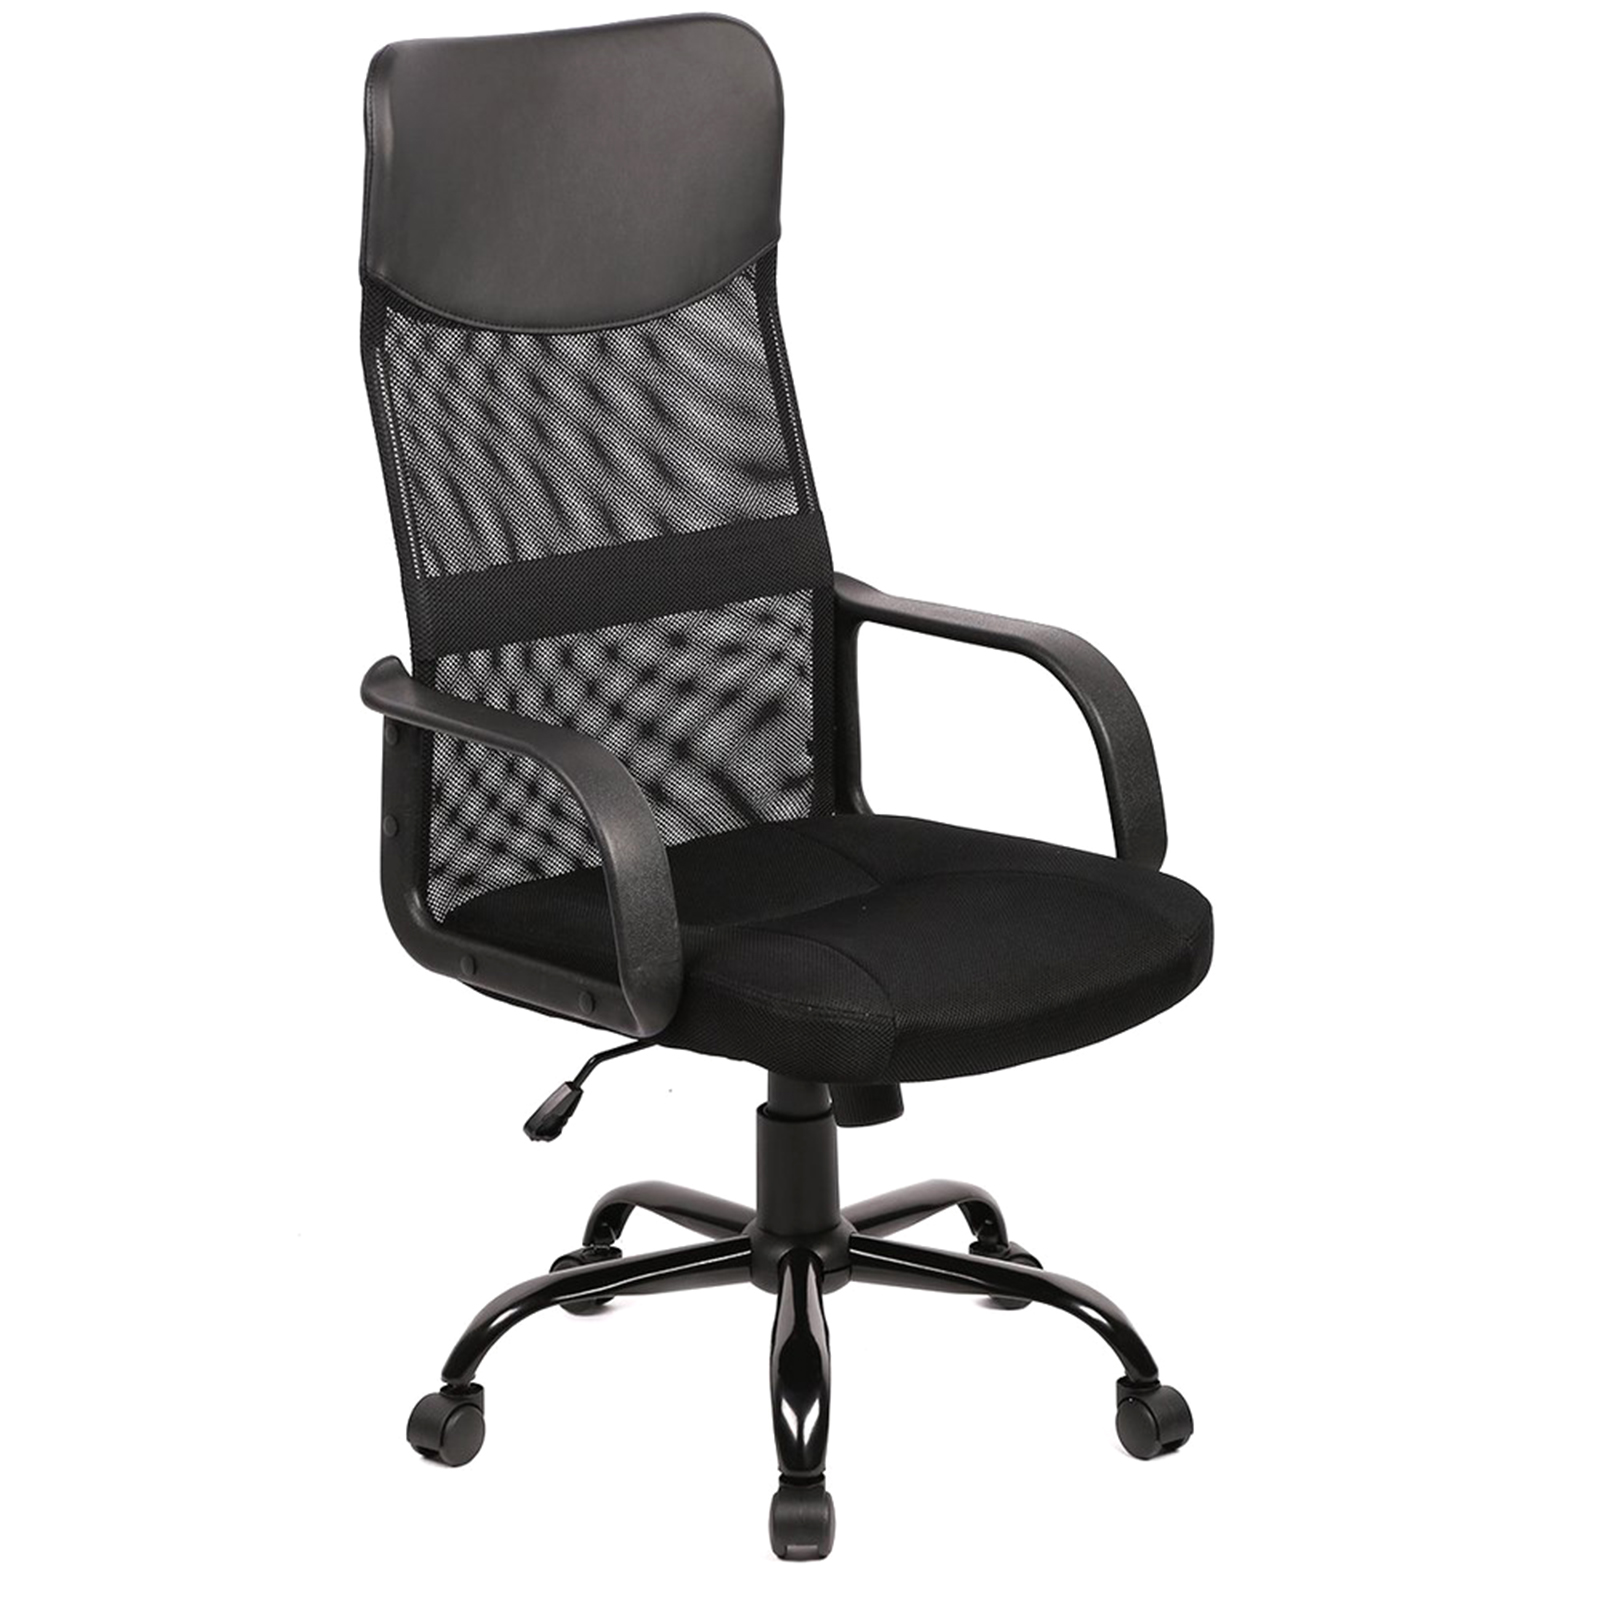 BestChair 19" Mesh High Back Computer Chair - Black